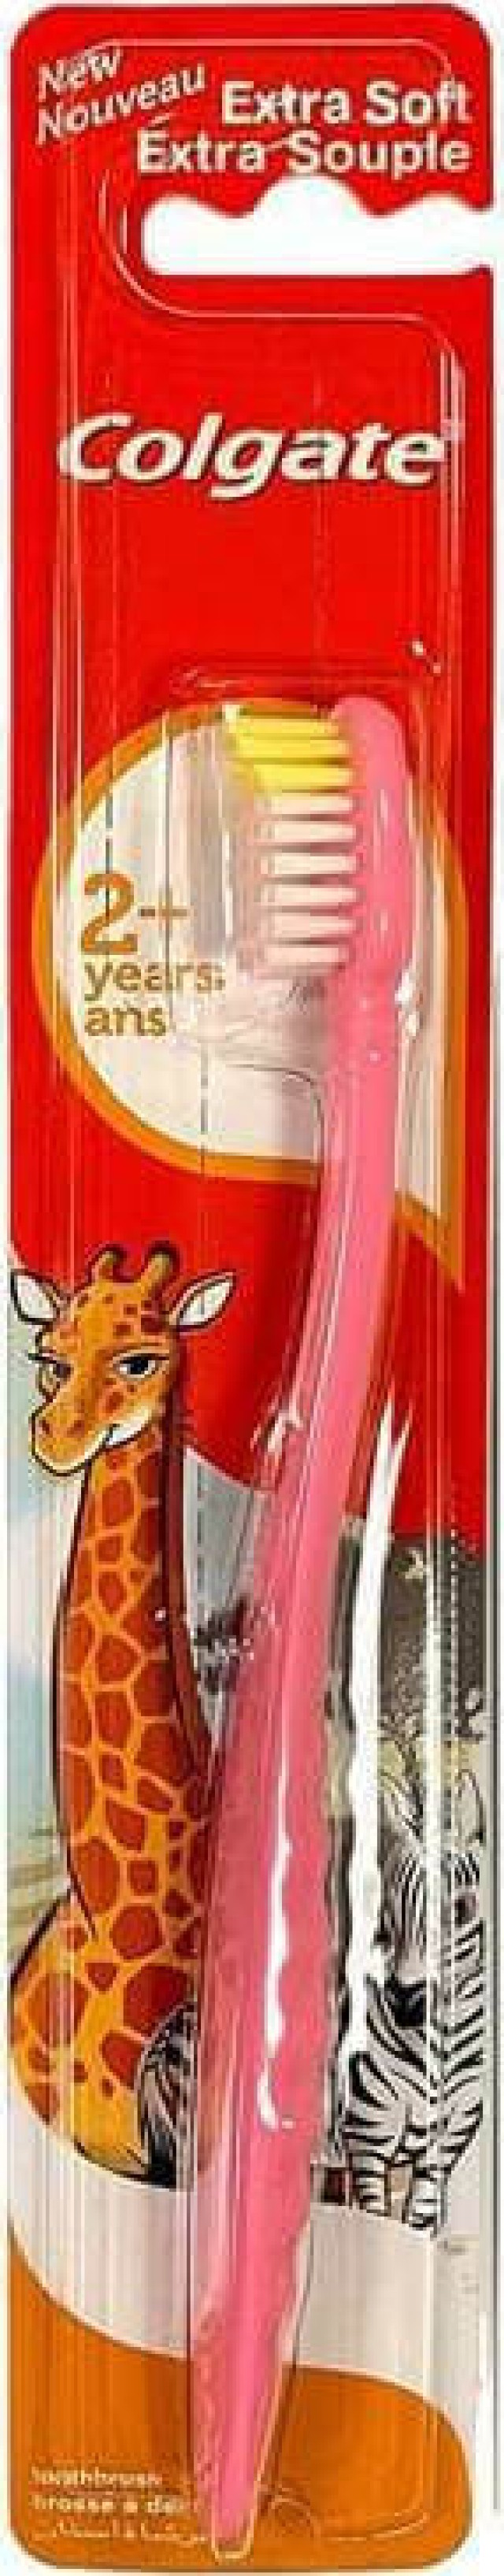 Colgate Παιδική Οδοντόβουρτσα Καμηλοπάρδαλη Extra Soft σε Χρώμα Ροζ για 2+ χρονών